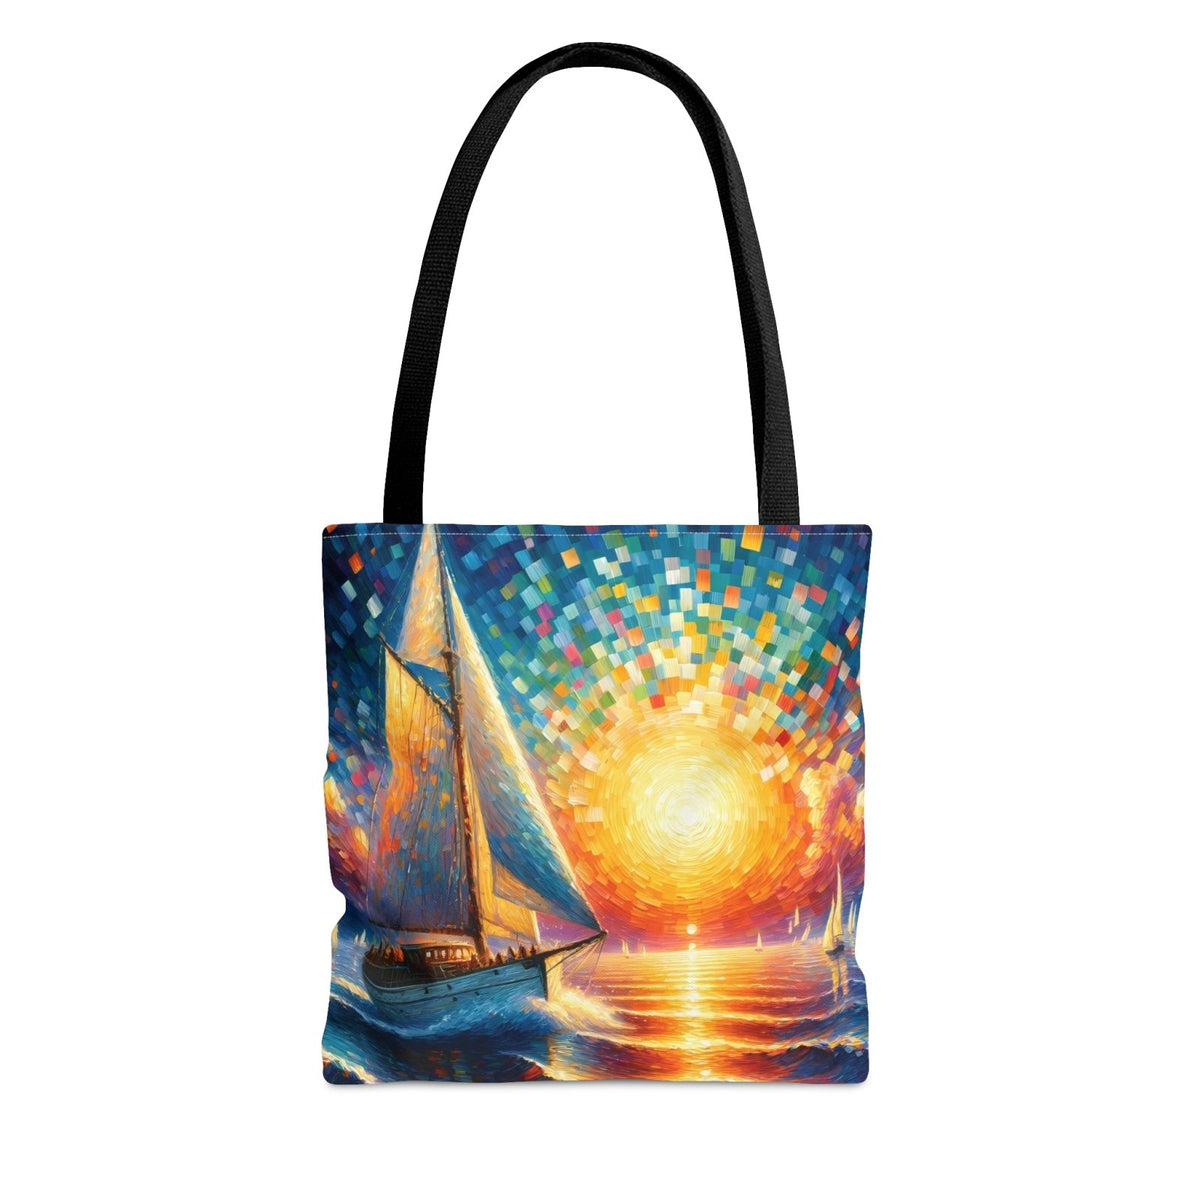 Mosaic Voyage Tote Bag, sailing tote, nautical fashion, sailboat mosaic bag - Subtle Blue M